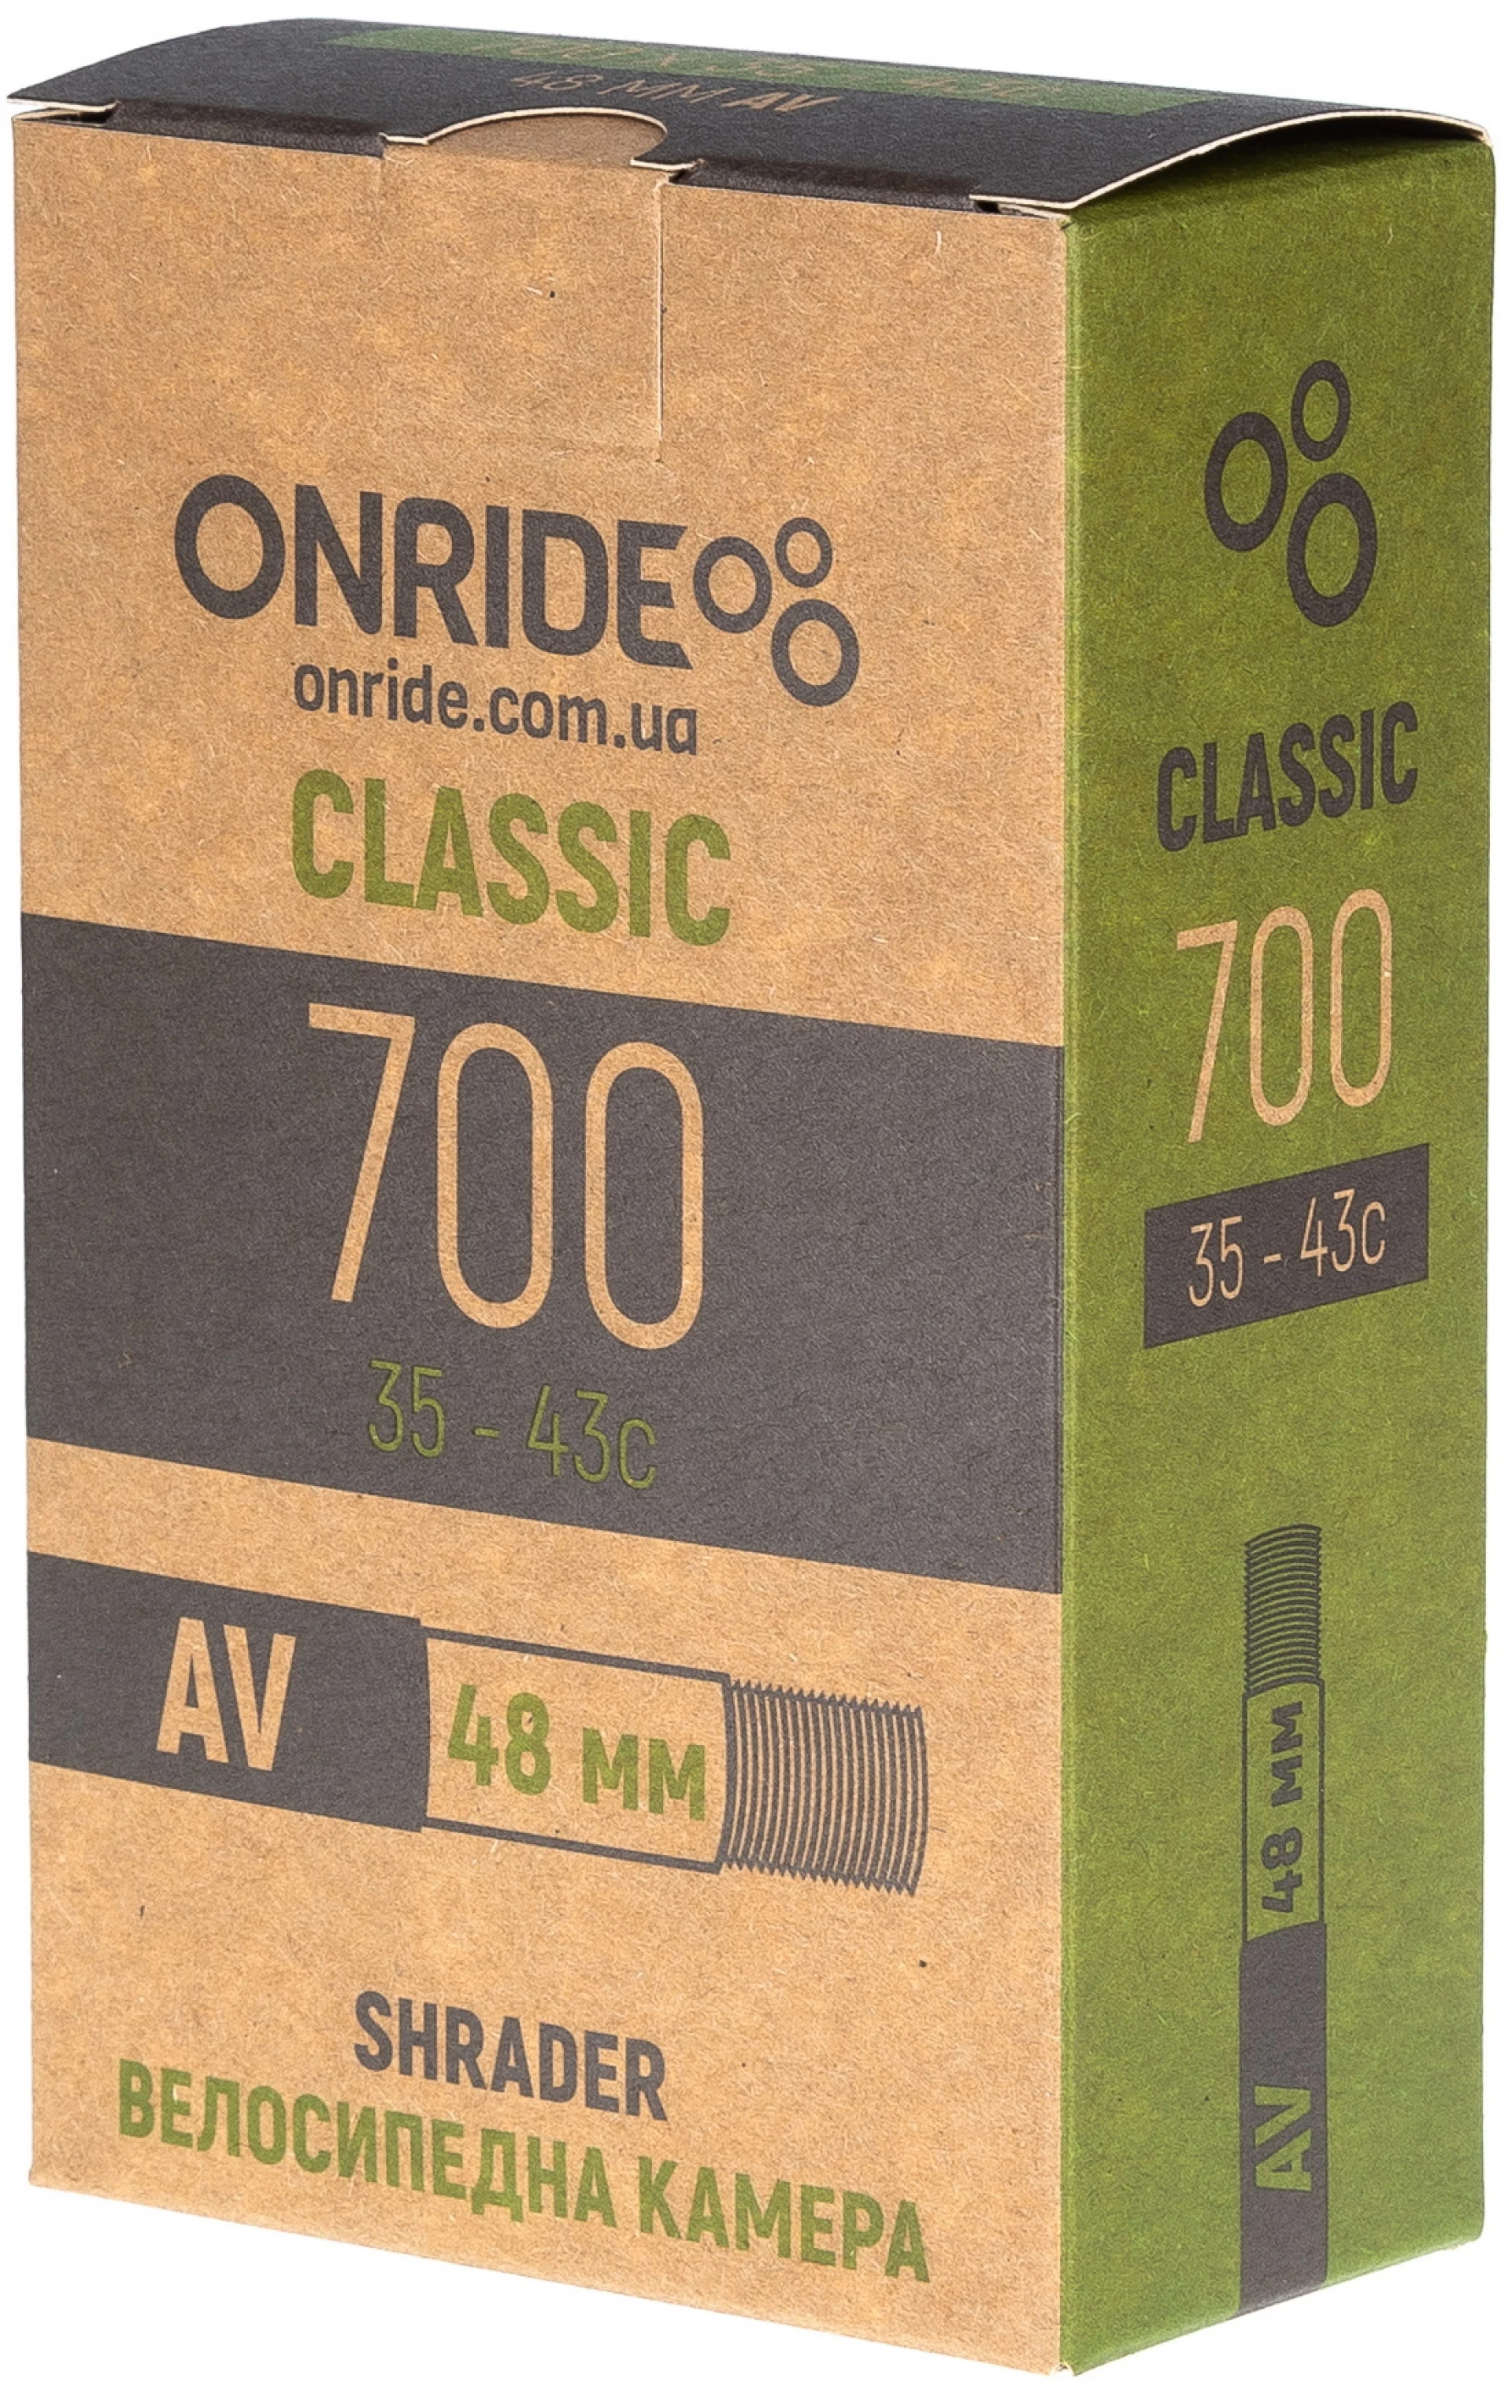 Камера ONRIDE Classic 700x35/43C AV 48, 6936116100725